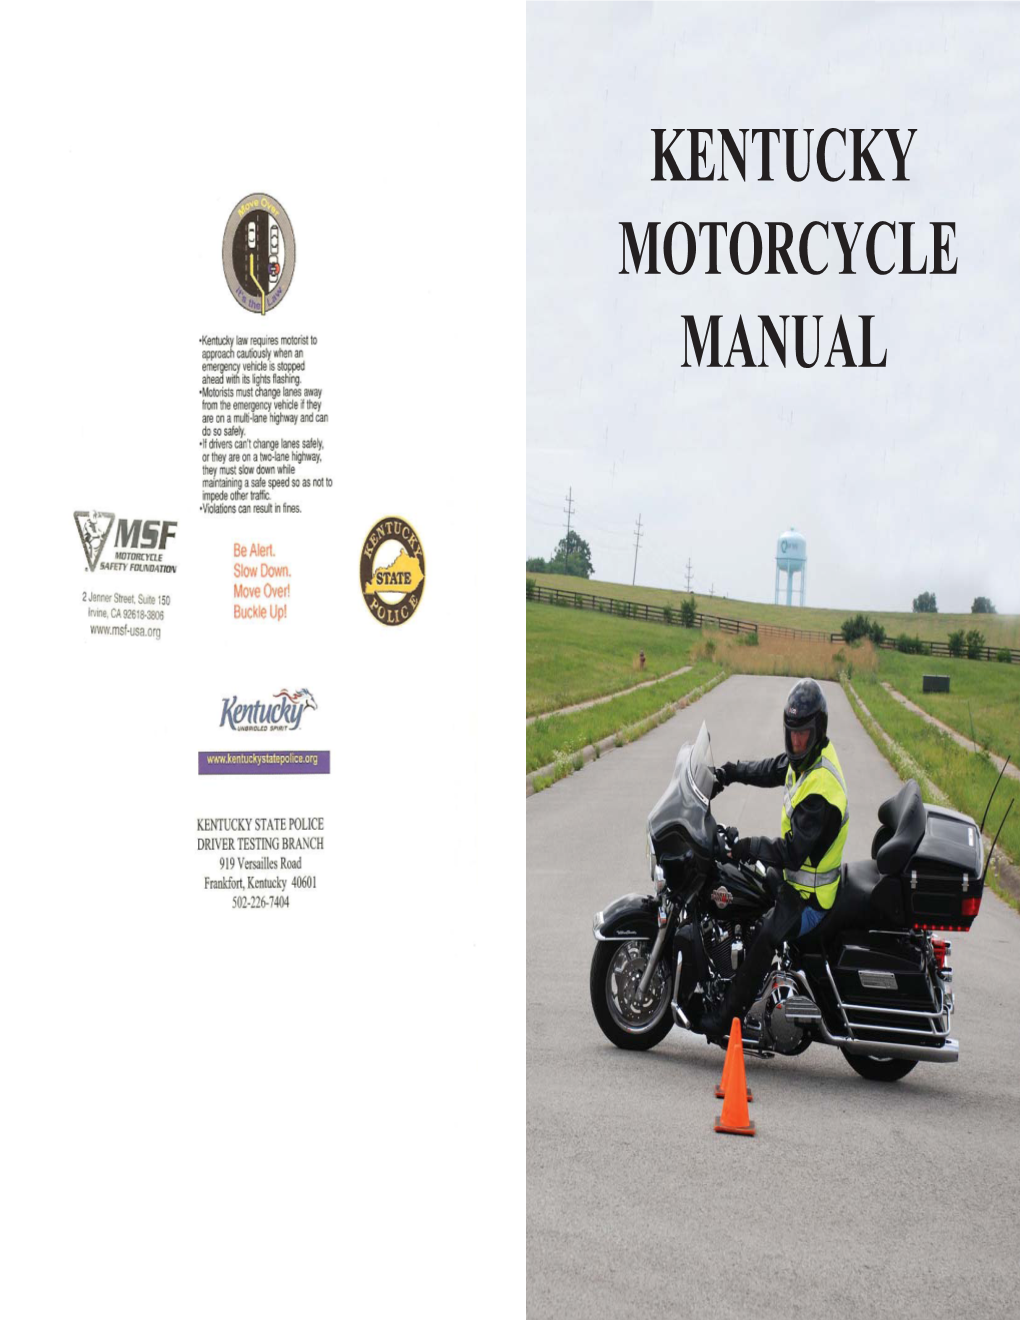 KENTUCKY MOTORCYCLE MANUAL KENTUCKY STATE POLICE C:O,..MO~